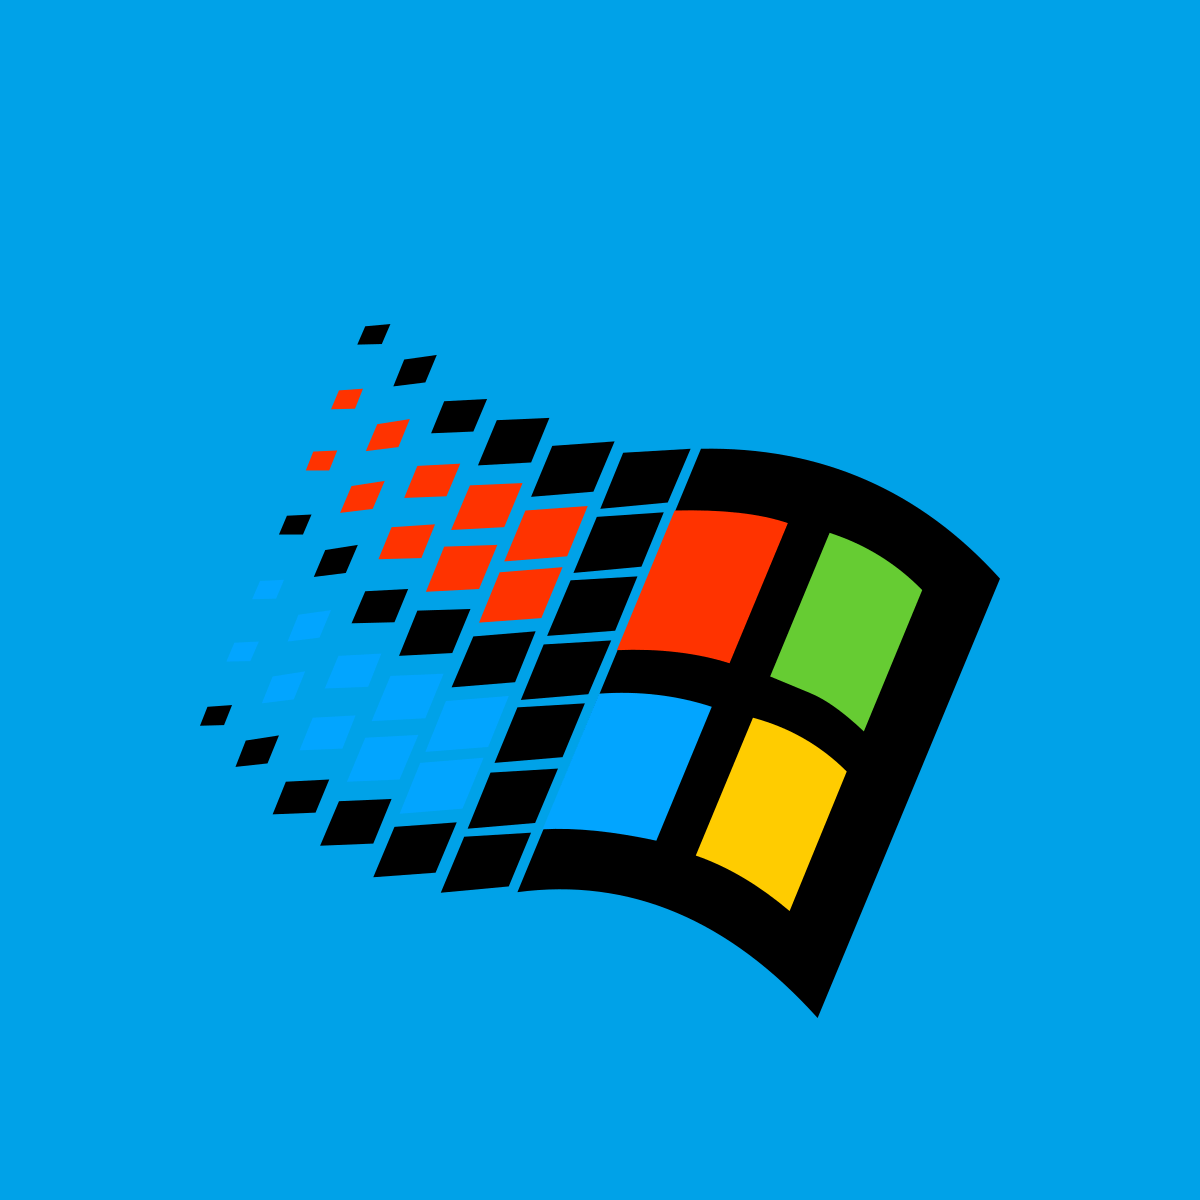 windows 95 games on windows 10